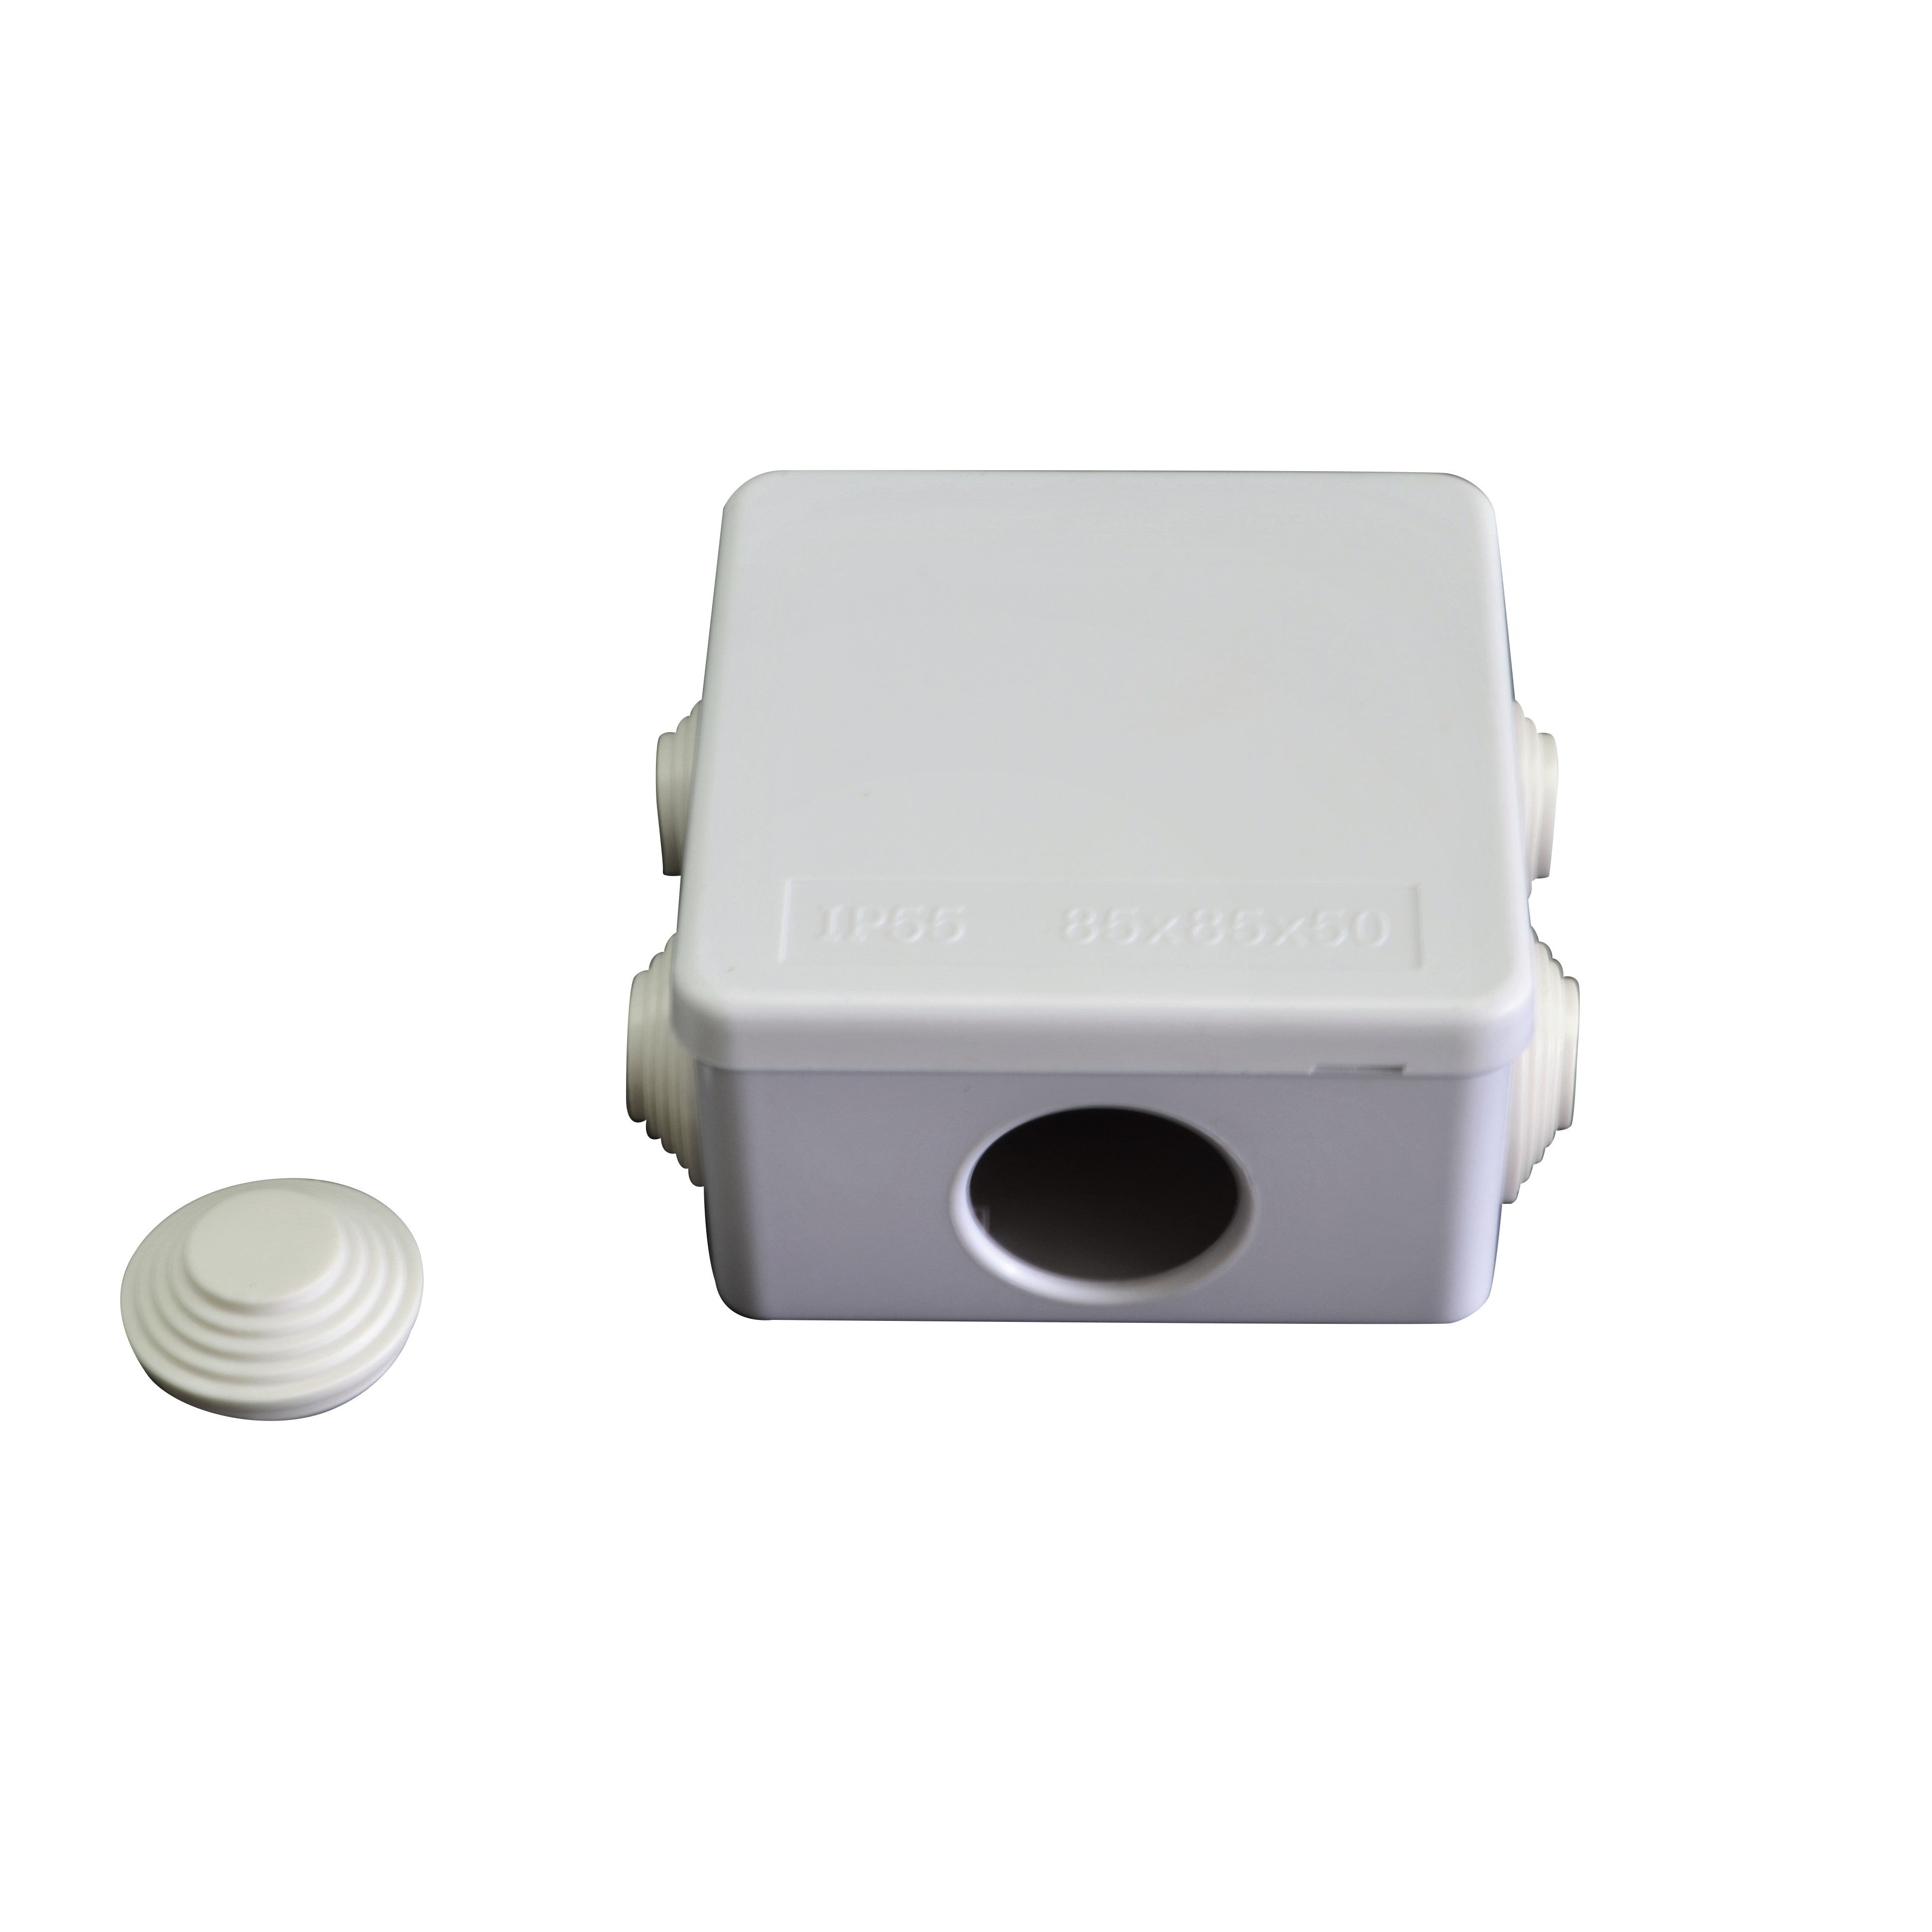 85x85x50 mm ABS Plastic IP55 Waterproof Junction Box